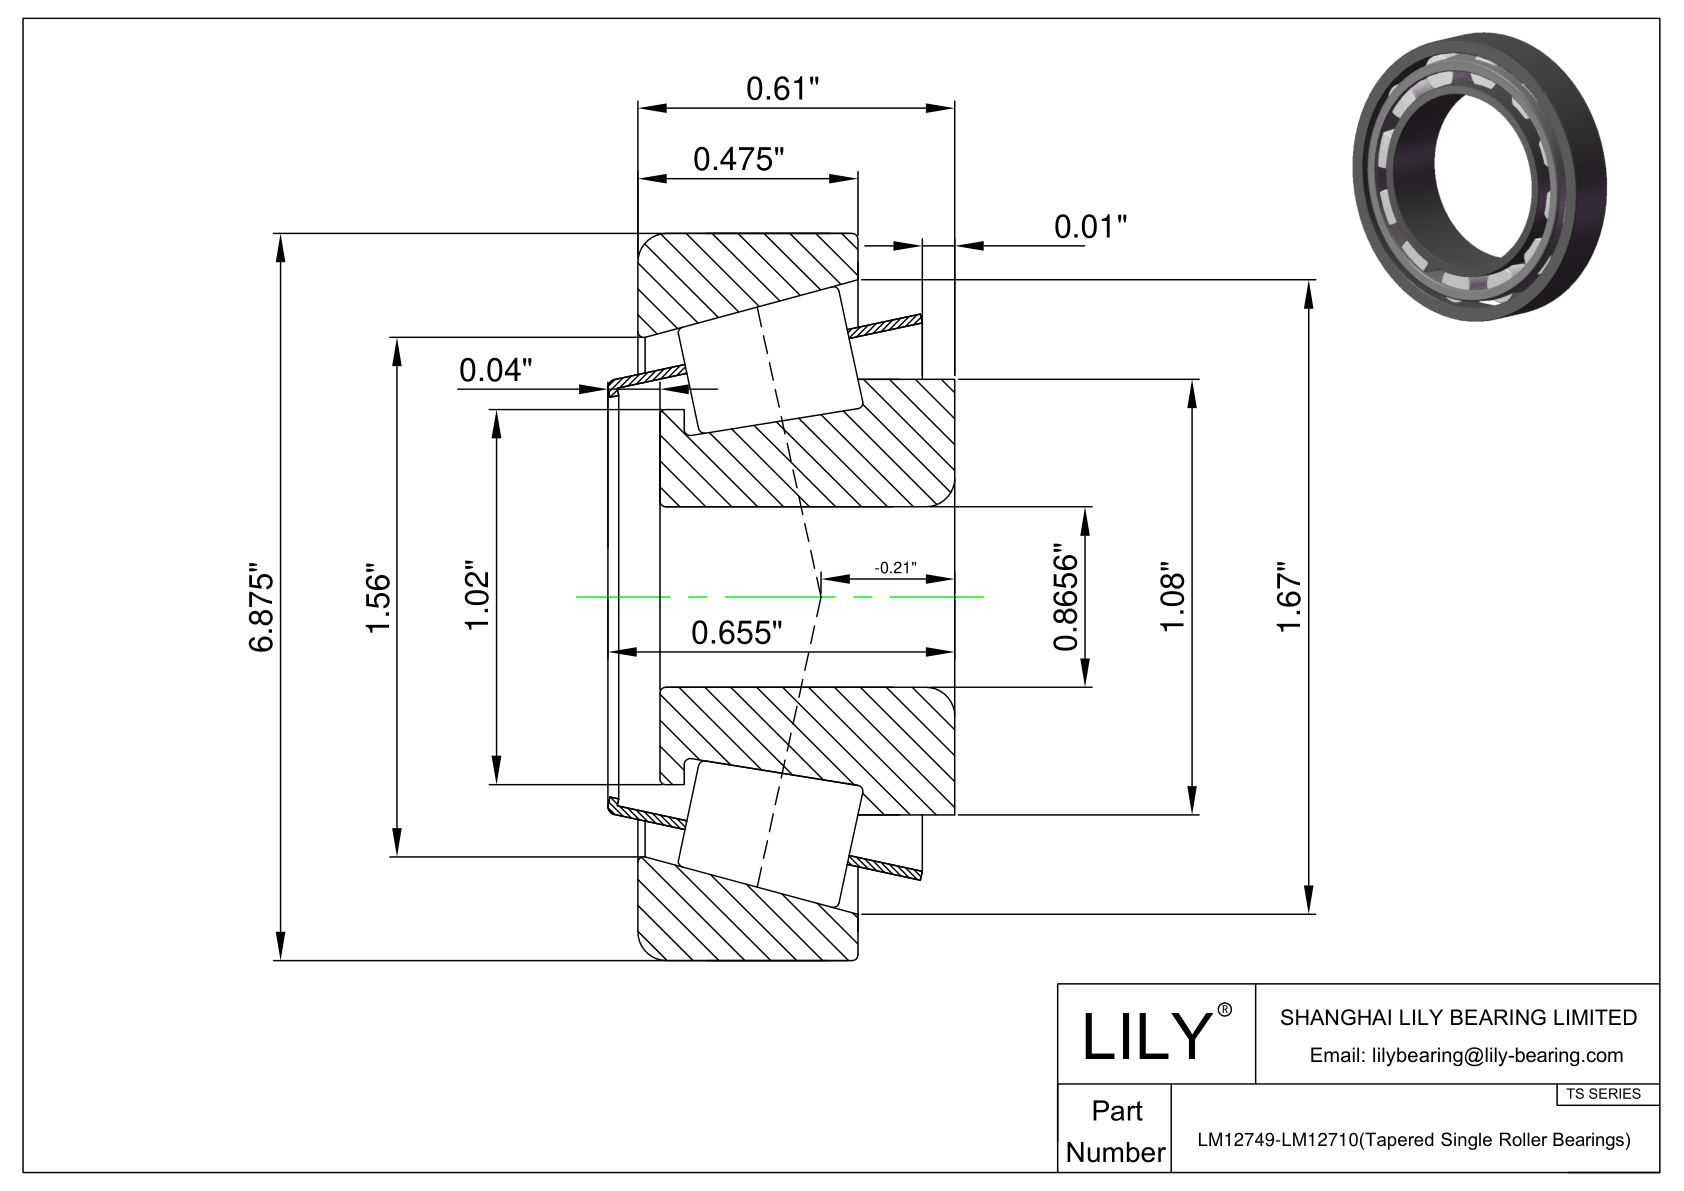 LM12749-LM12710 TS系列(圆锥单滚子轴承)(英制) CAD图形